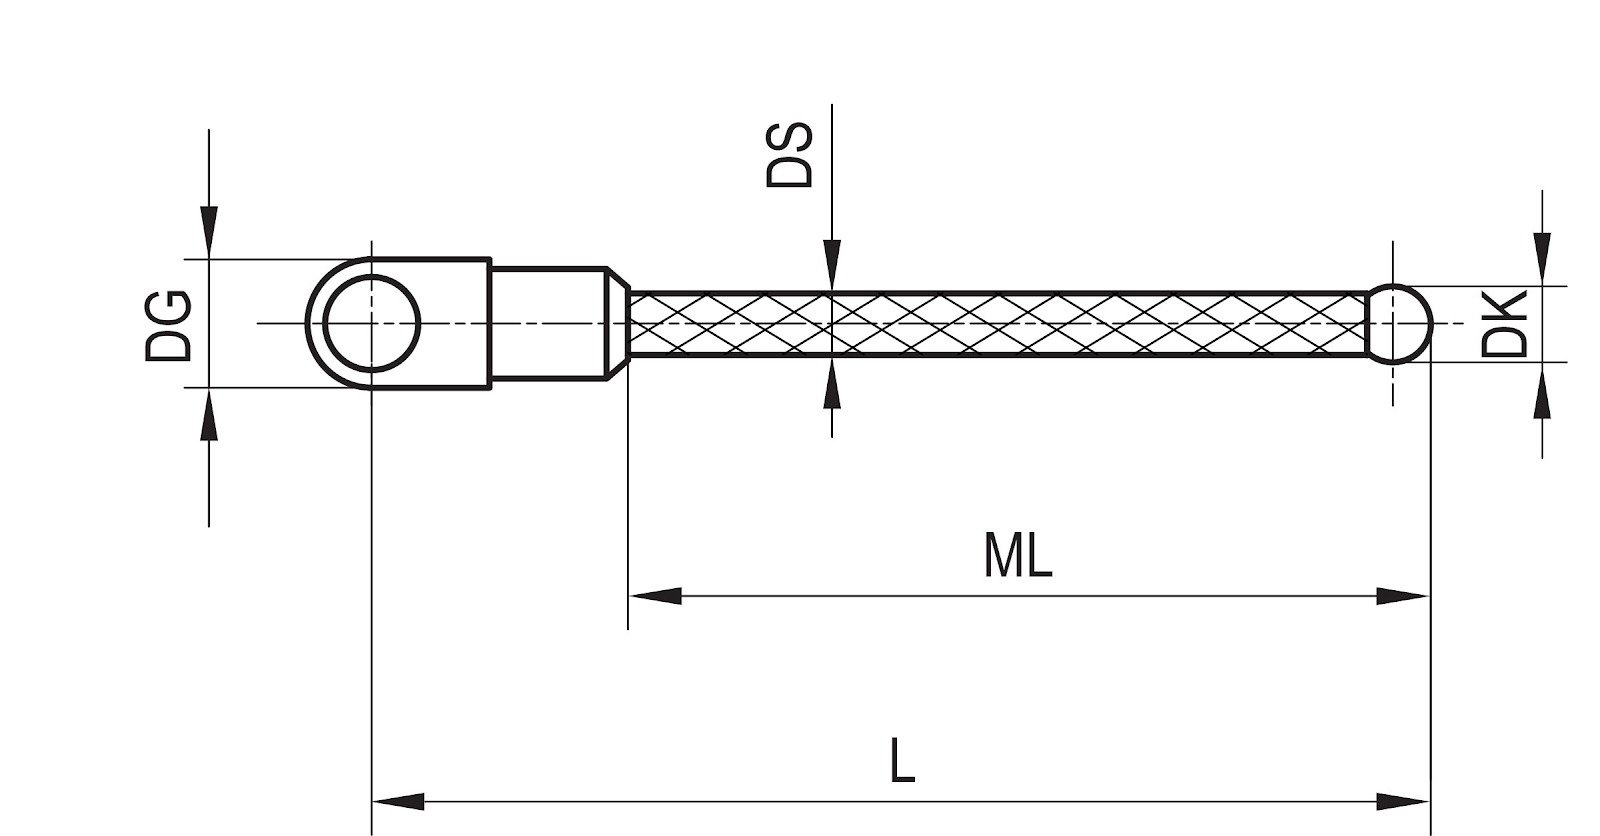 Renishaw, M3 1/4 star stylus, Ø3 mm ruby ball, carbon fibre stem, ML 21 mm, for Zeiss applications, A-5555-1274